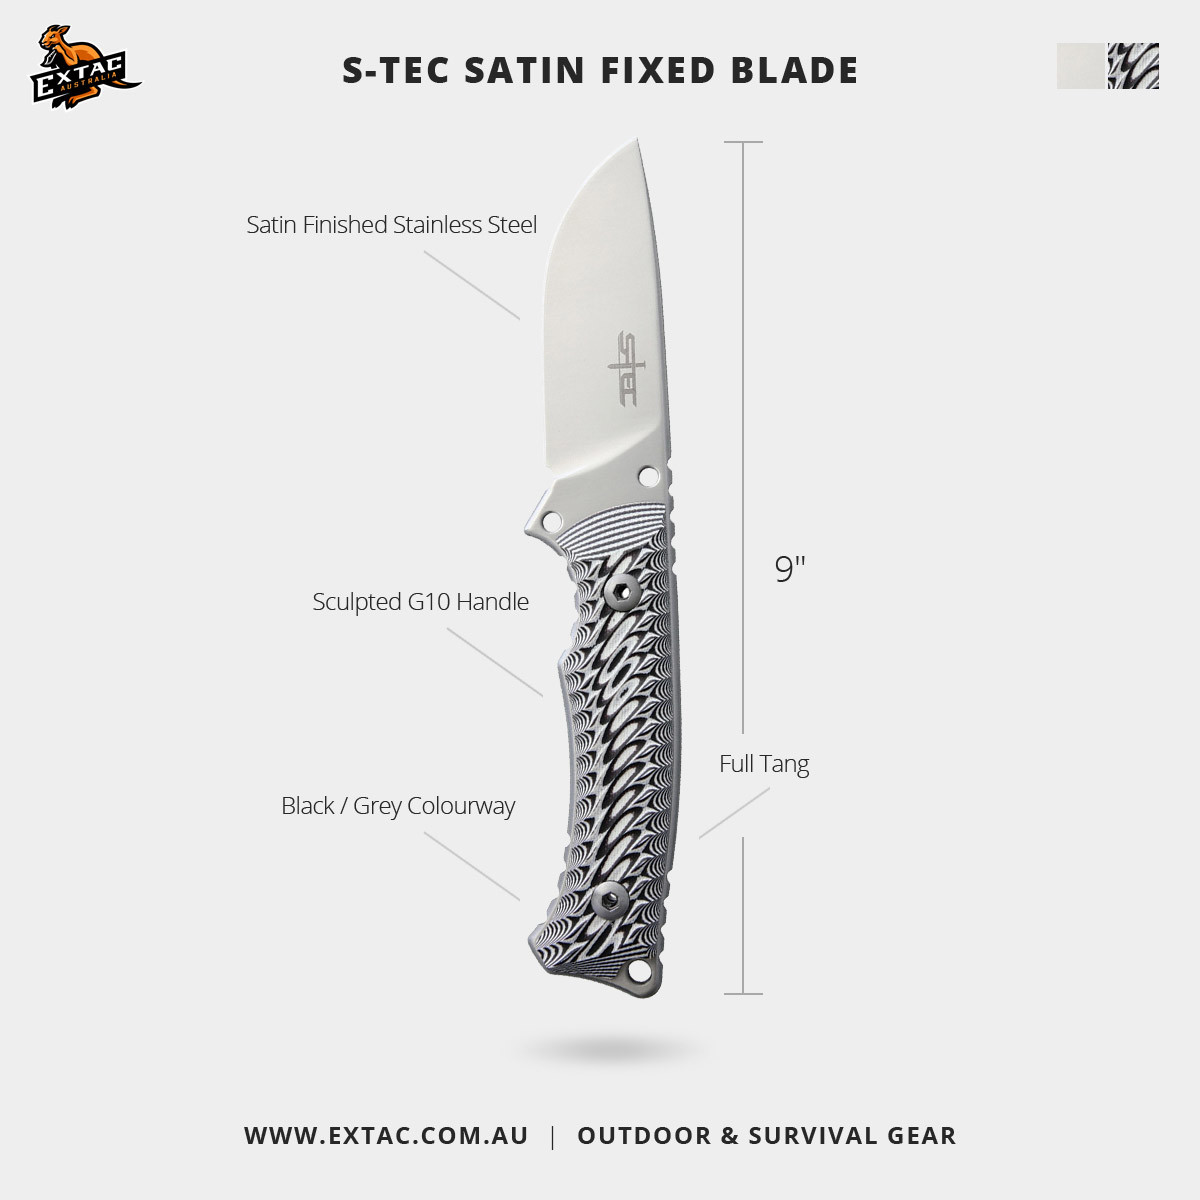 Extac Australia - S-TEC Satin Fixed Blade Knife